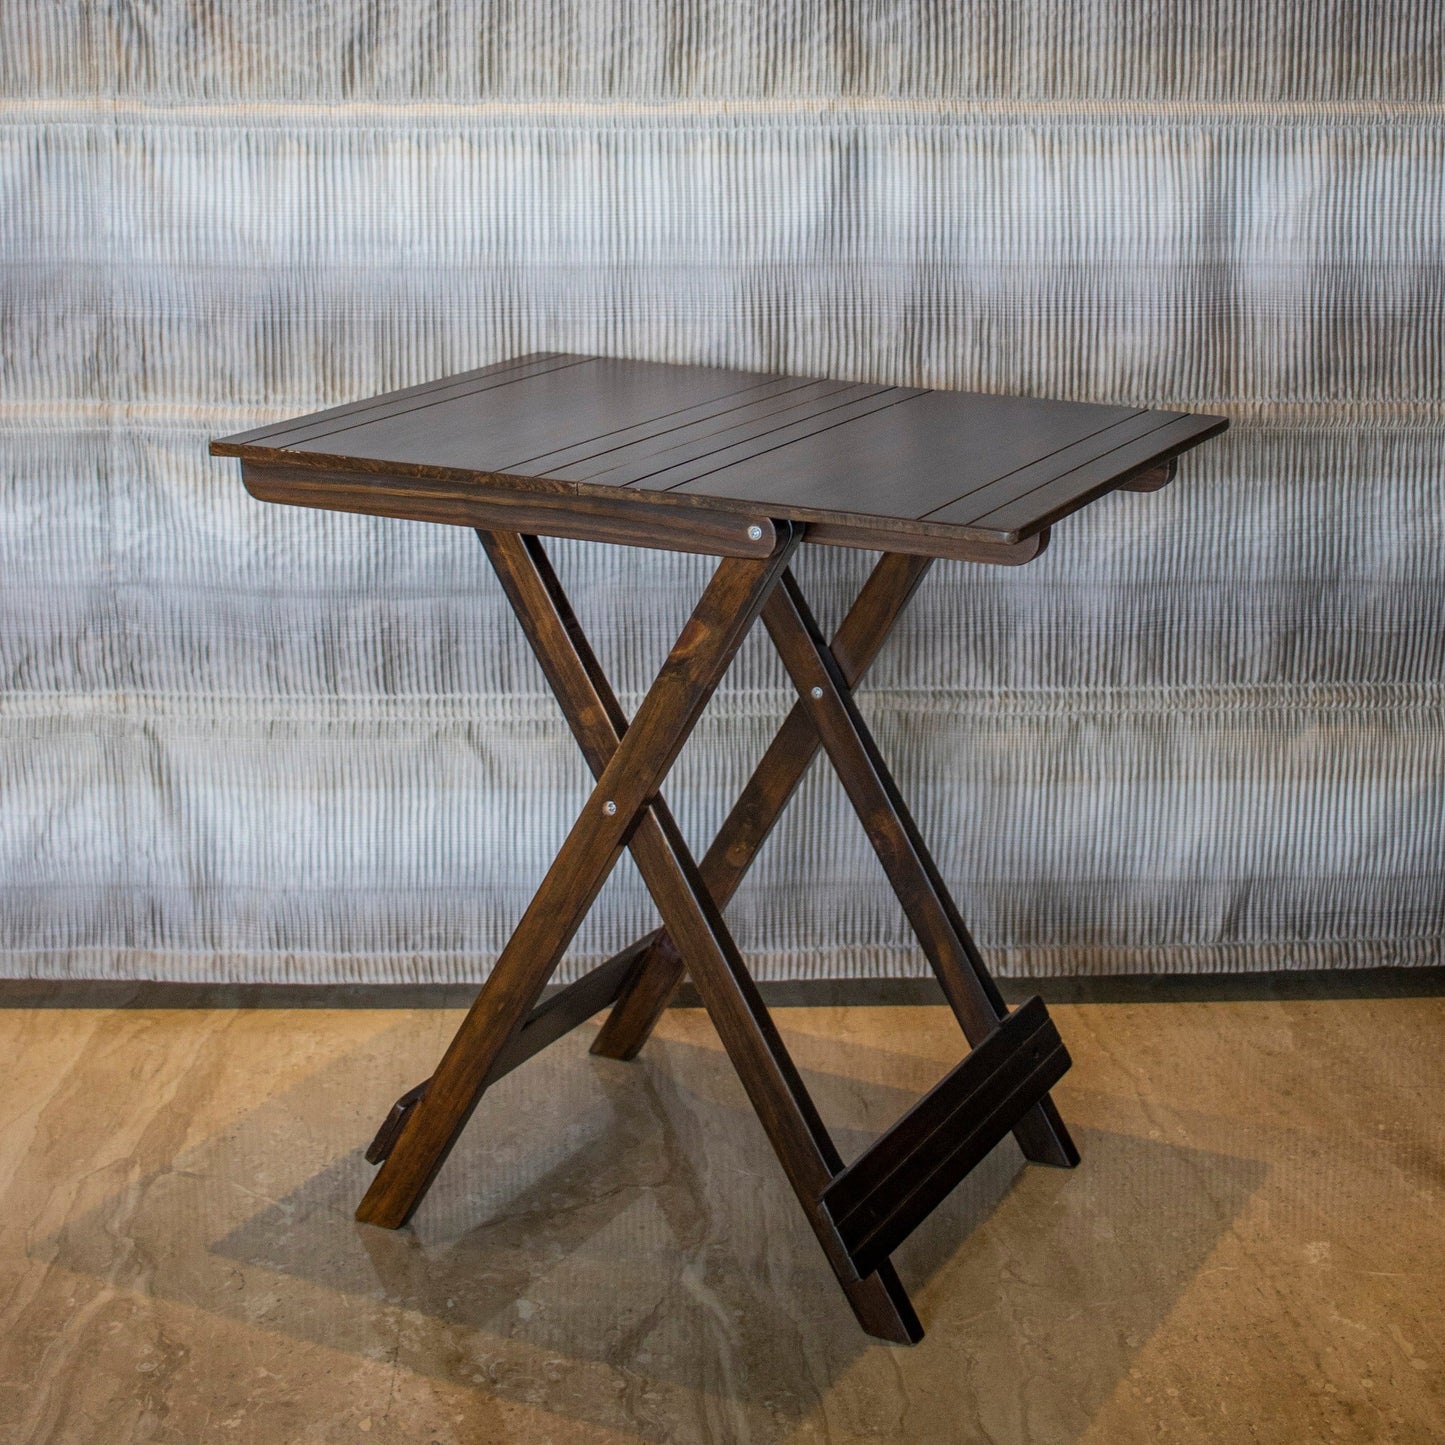 Nihar - Solid Wood Sofa Desks - Ebony WoodcraftsFolding Tables, Side Tables, End Table